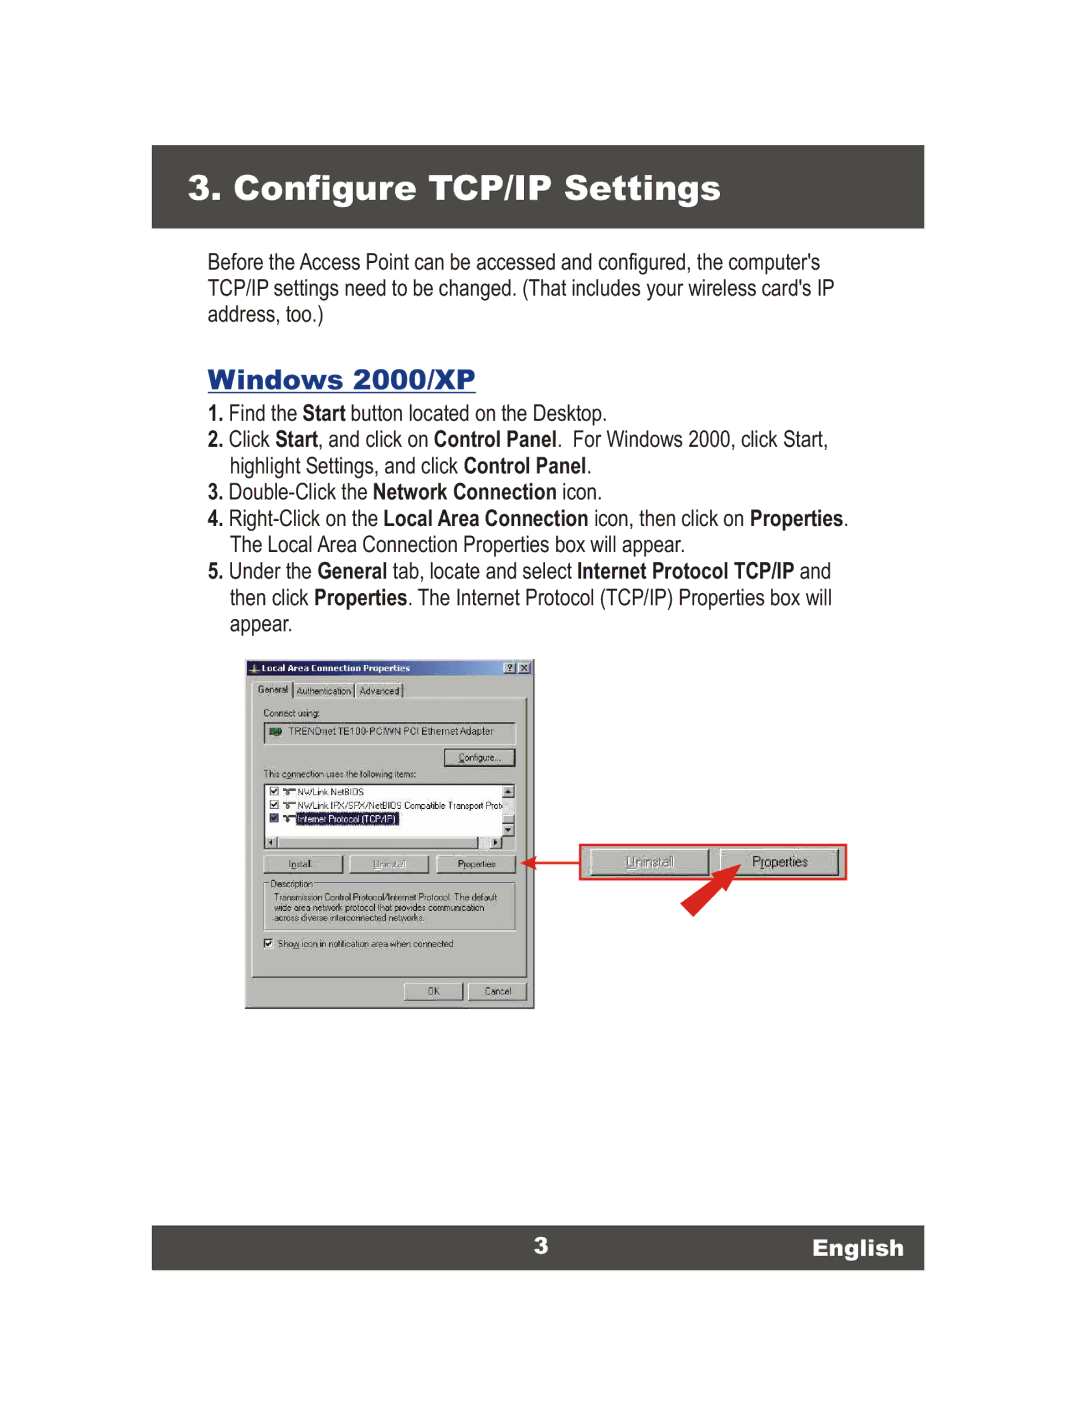 TRENDnet Super G Access Point, TEW-450APB manual Configure TCP/IP Settings, Windows 2000/XP, 3English 